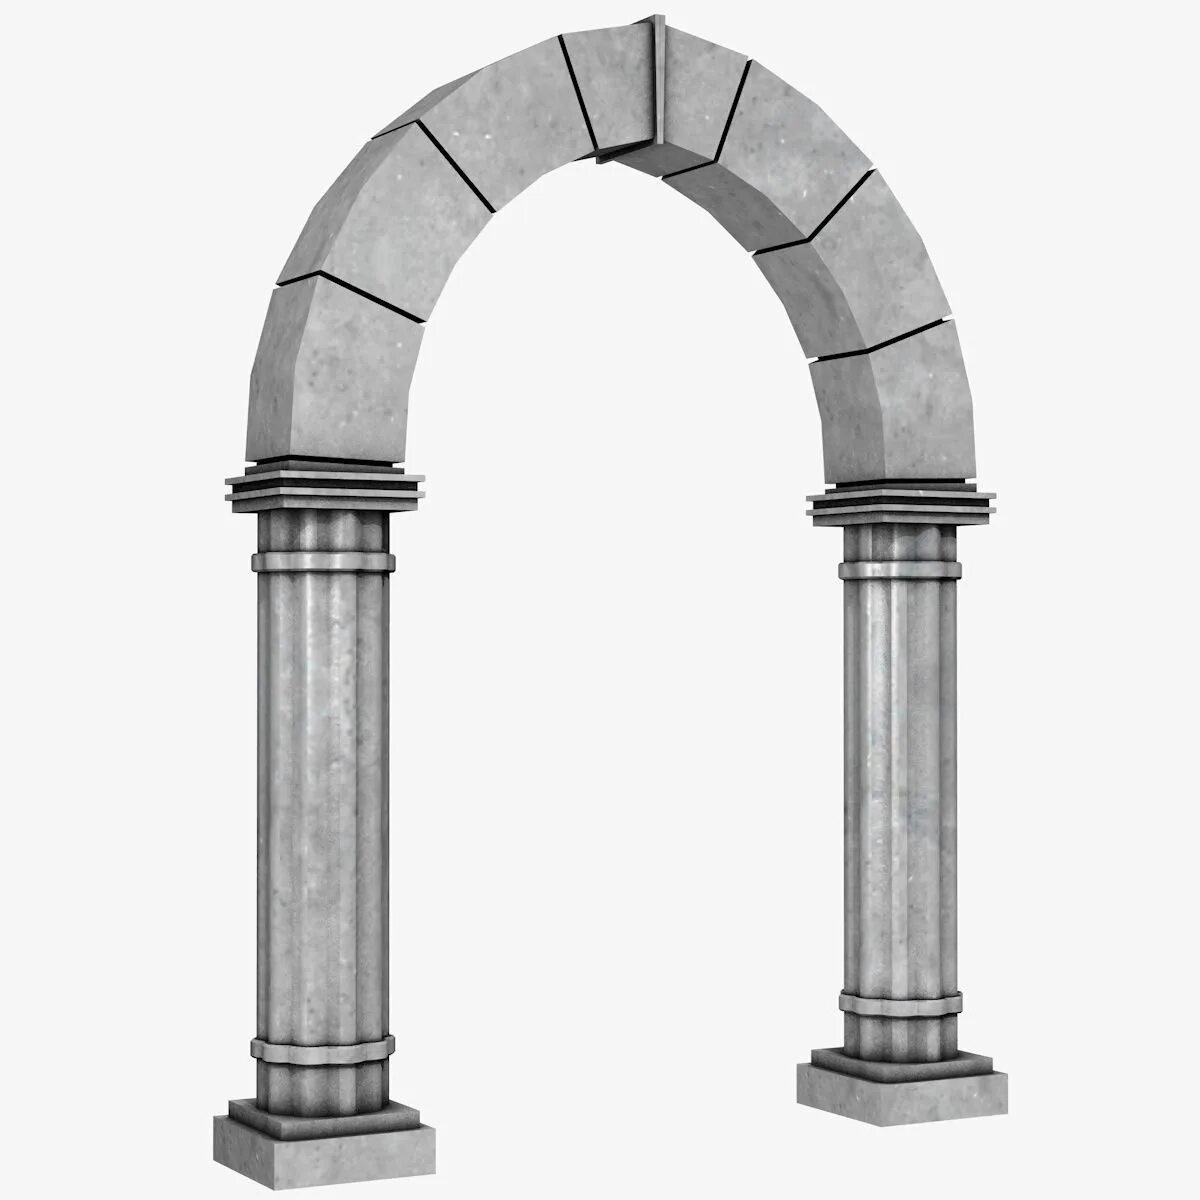 Лицо арка. Archway сщштдшые. Каменная арка. Арка с колоннами. Каменная арка на белом фоне.